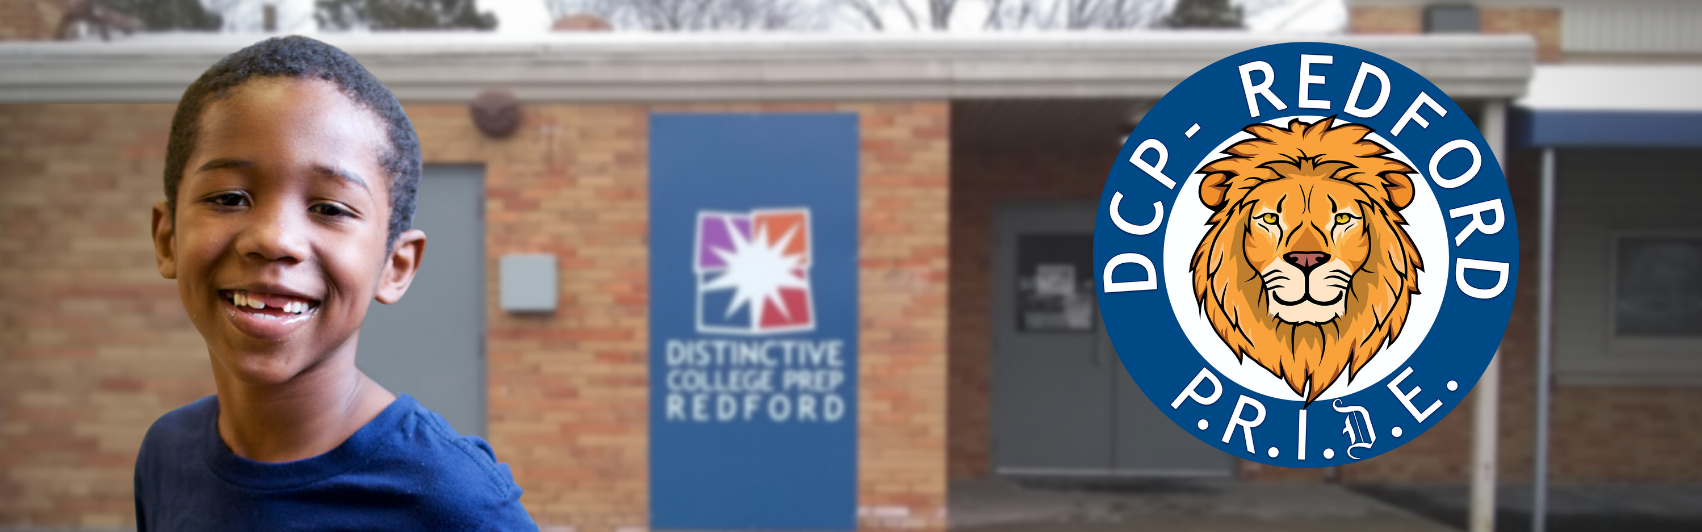 DCP Redford student smiling, campus exterior, round logo